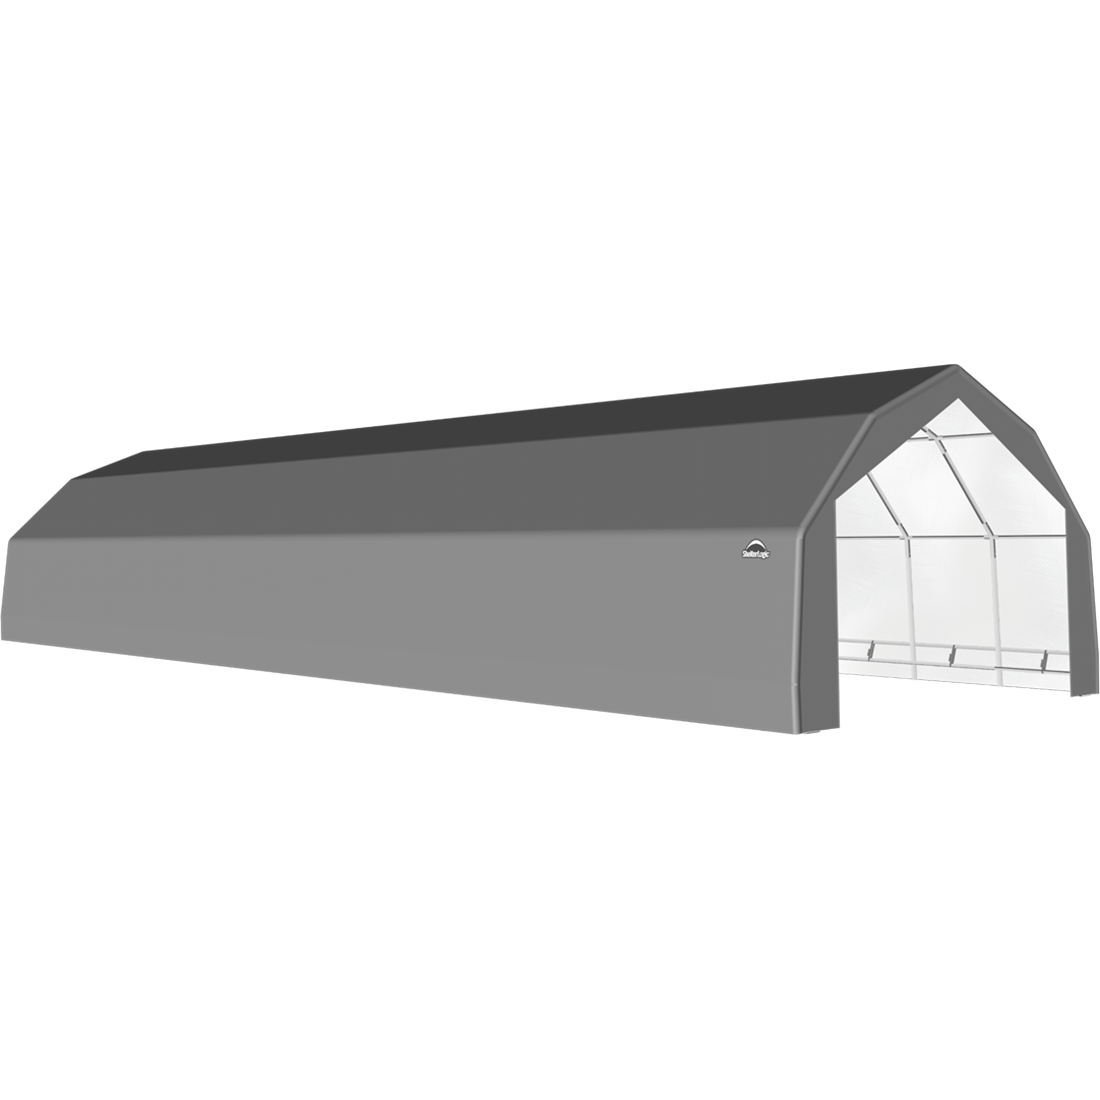 ShelterTech SP Series Barn Shelter, 20 ft. x 52 ft. x 12 ft. Heavy Duty PVC 14.5 oz. Gray